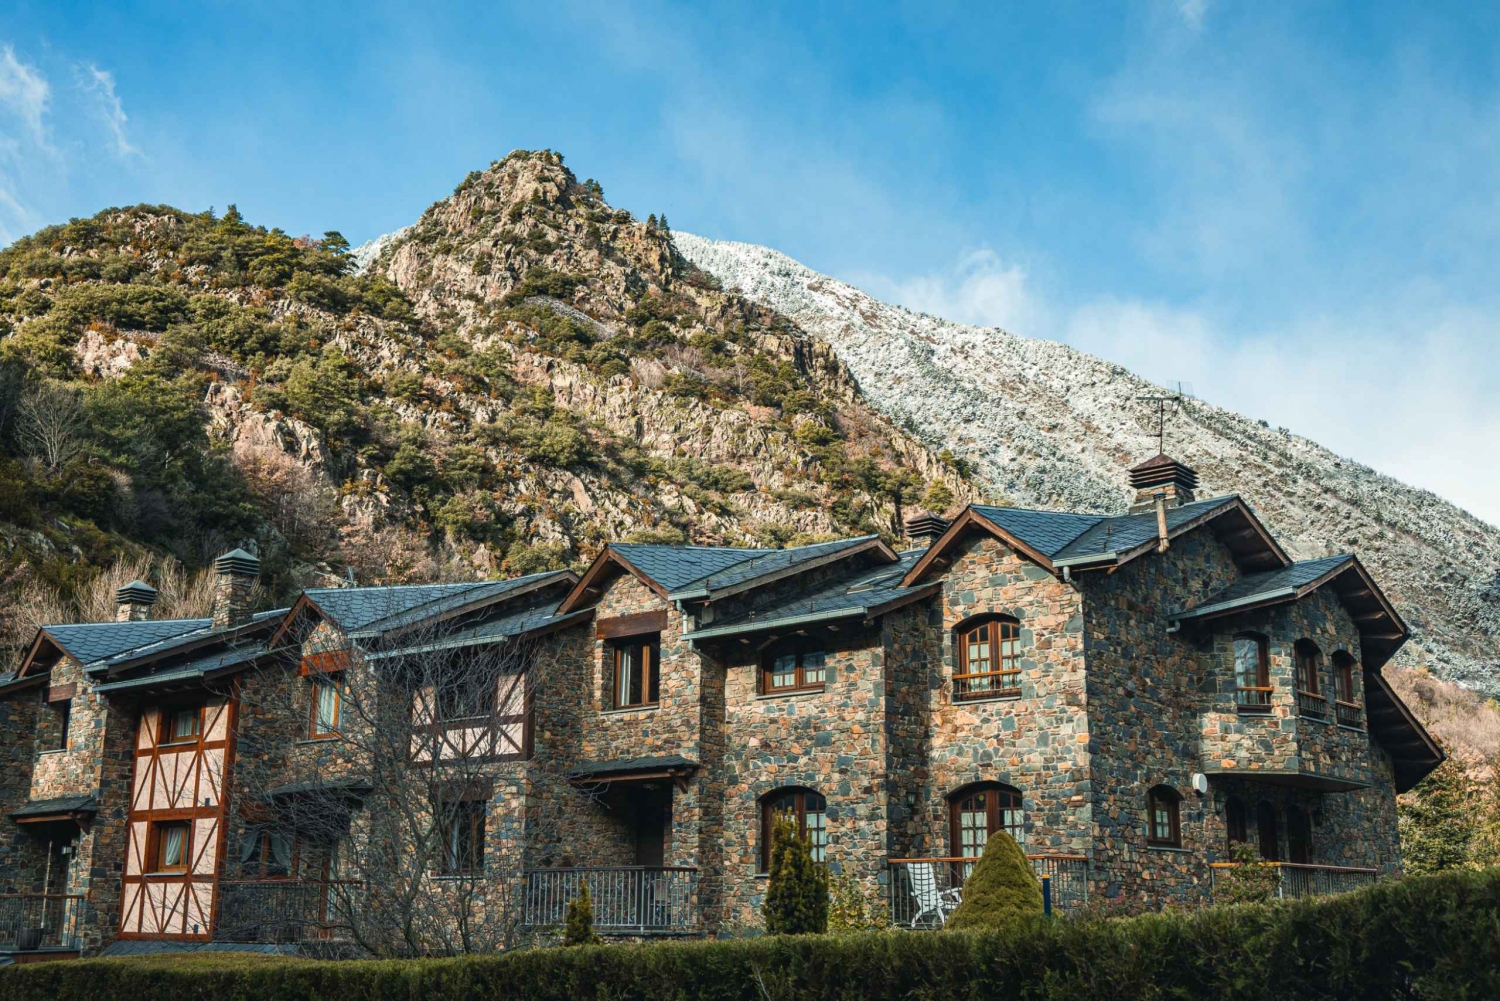 De Barcelona: Excursão particular de 1 dia pelos destaques de Andorra